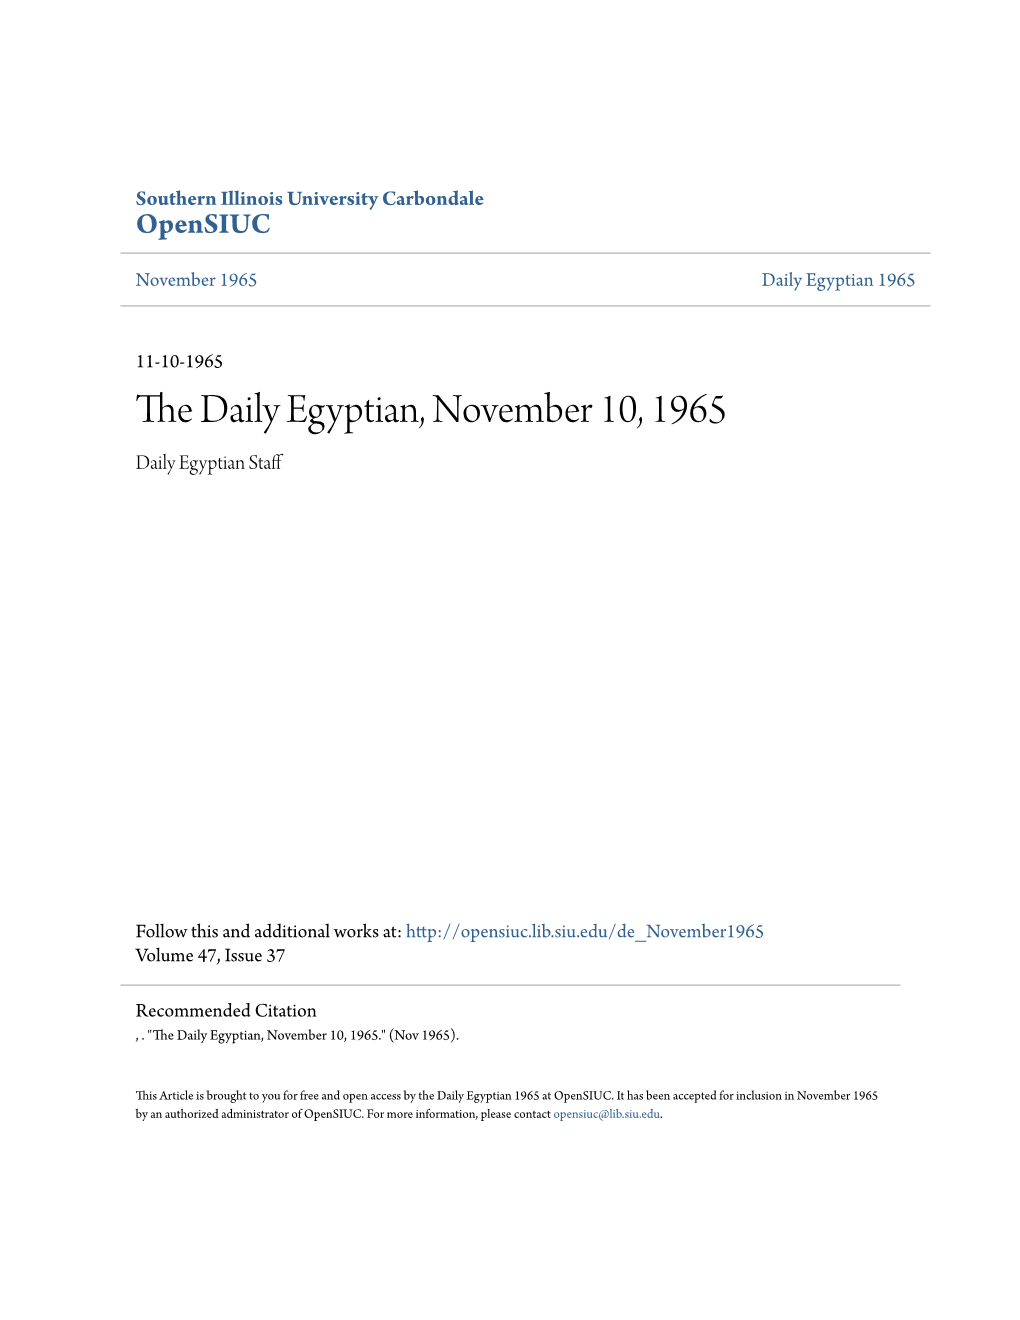 The Daily Egyptian, November 10, 1965